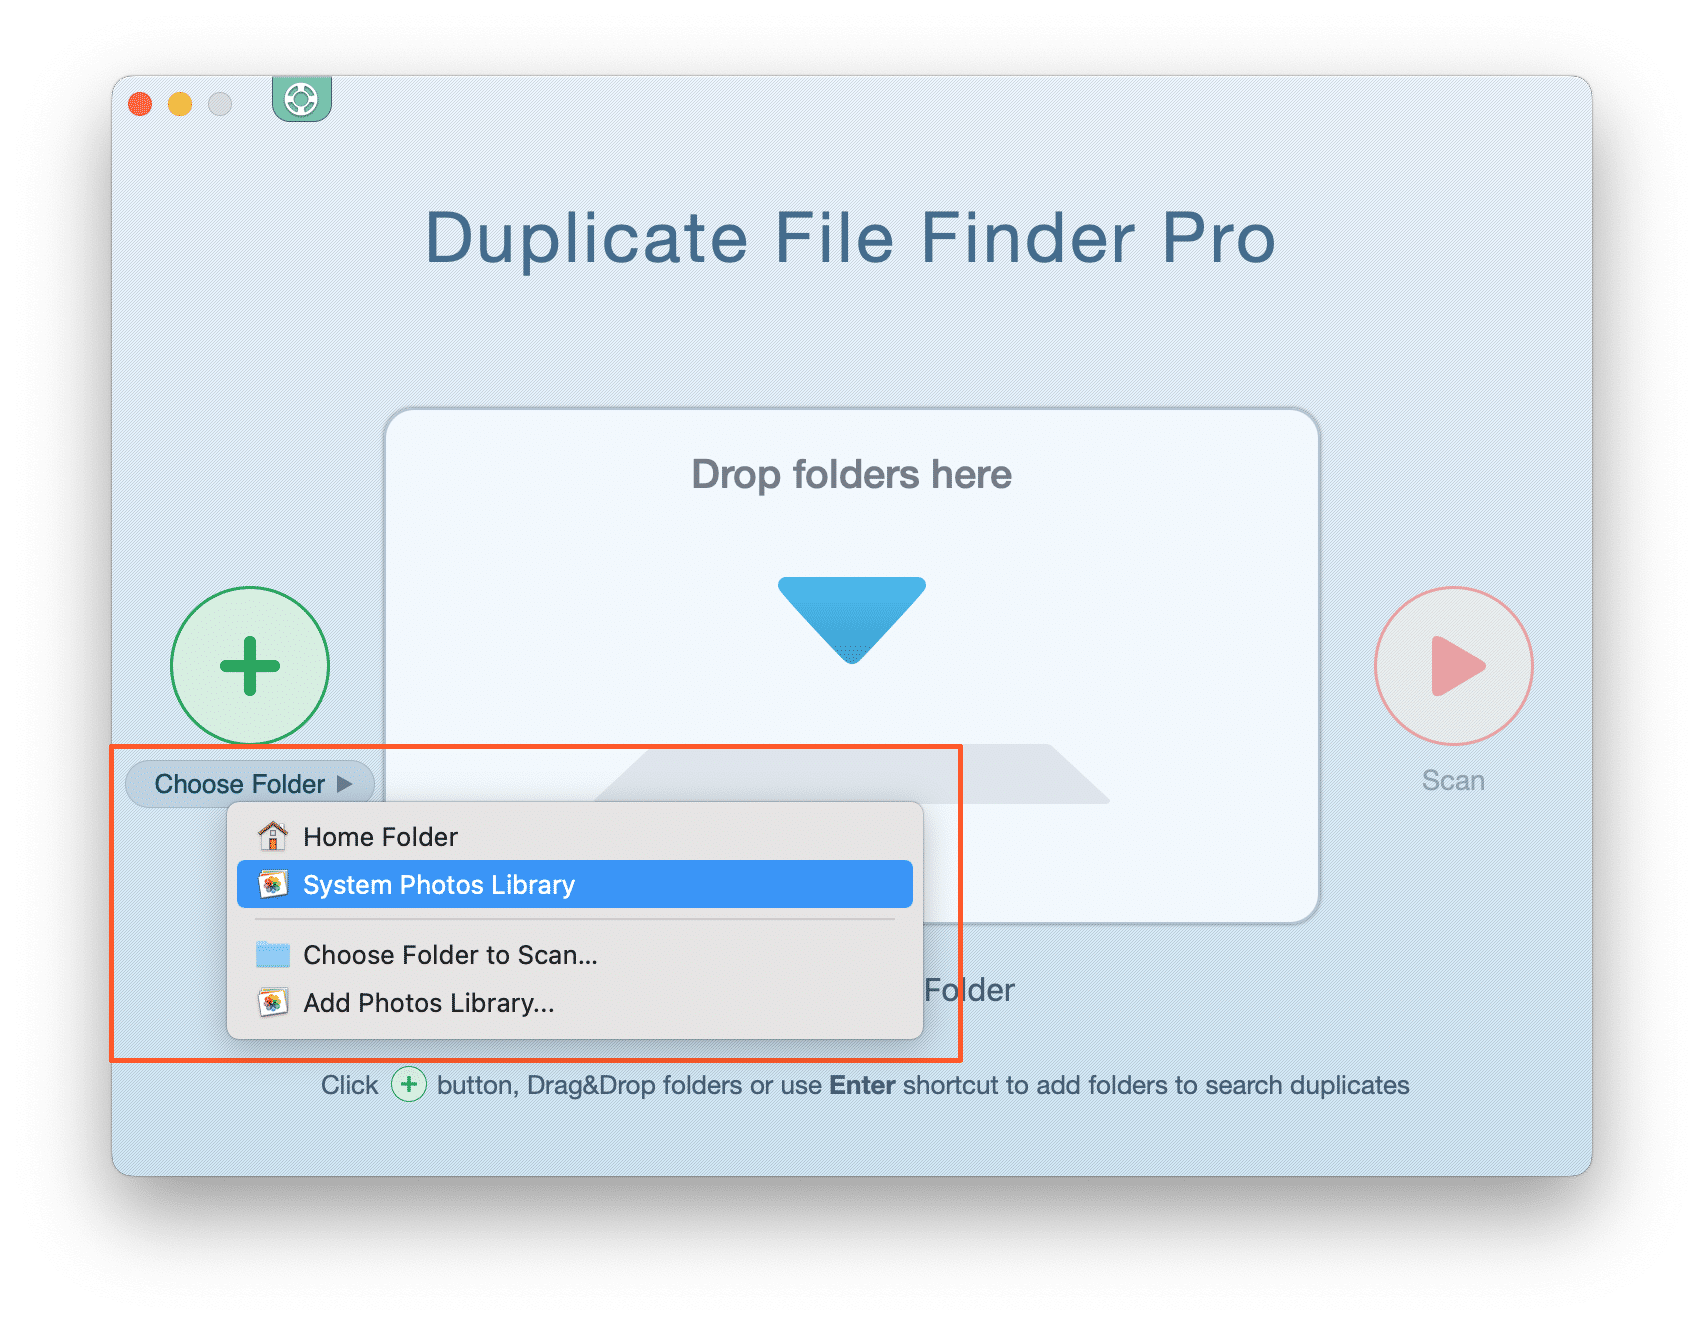 Duplicate File Finder start window showing how to choose a folder for scanning